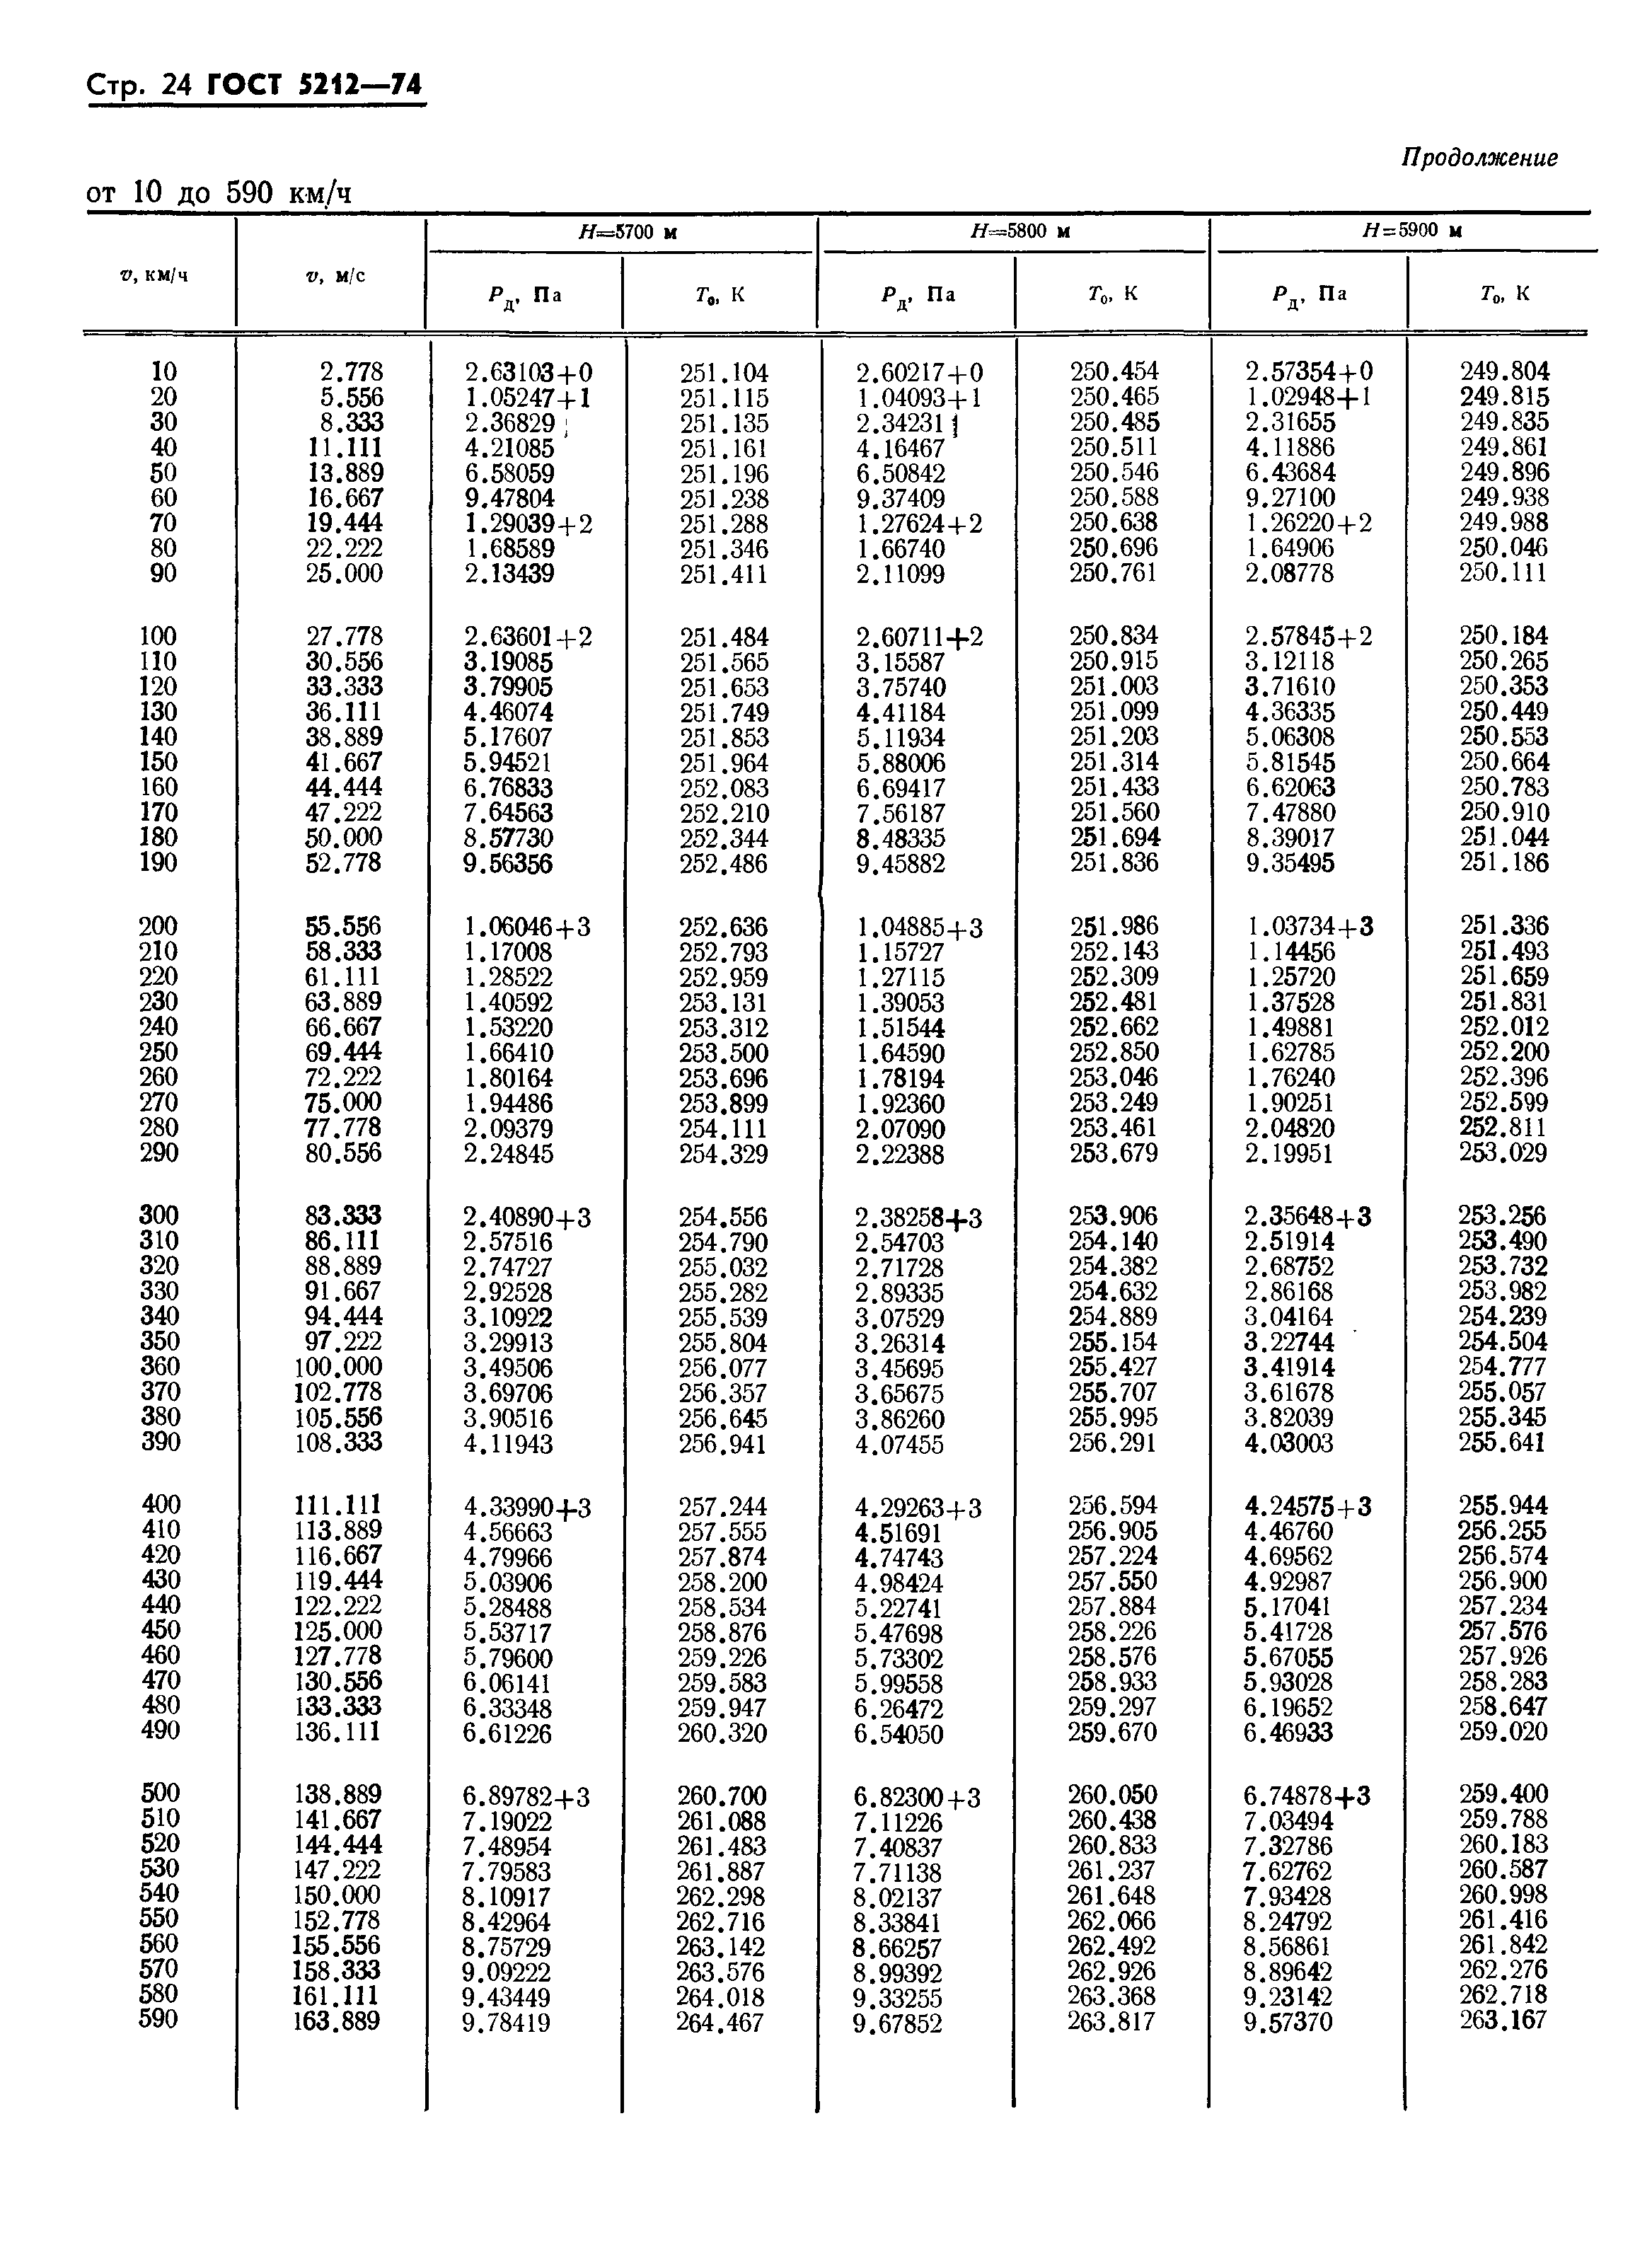 ГОСТ 5212-74